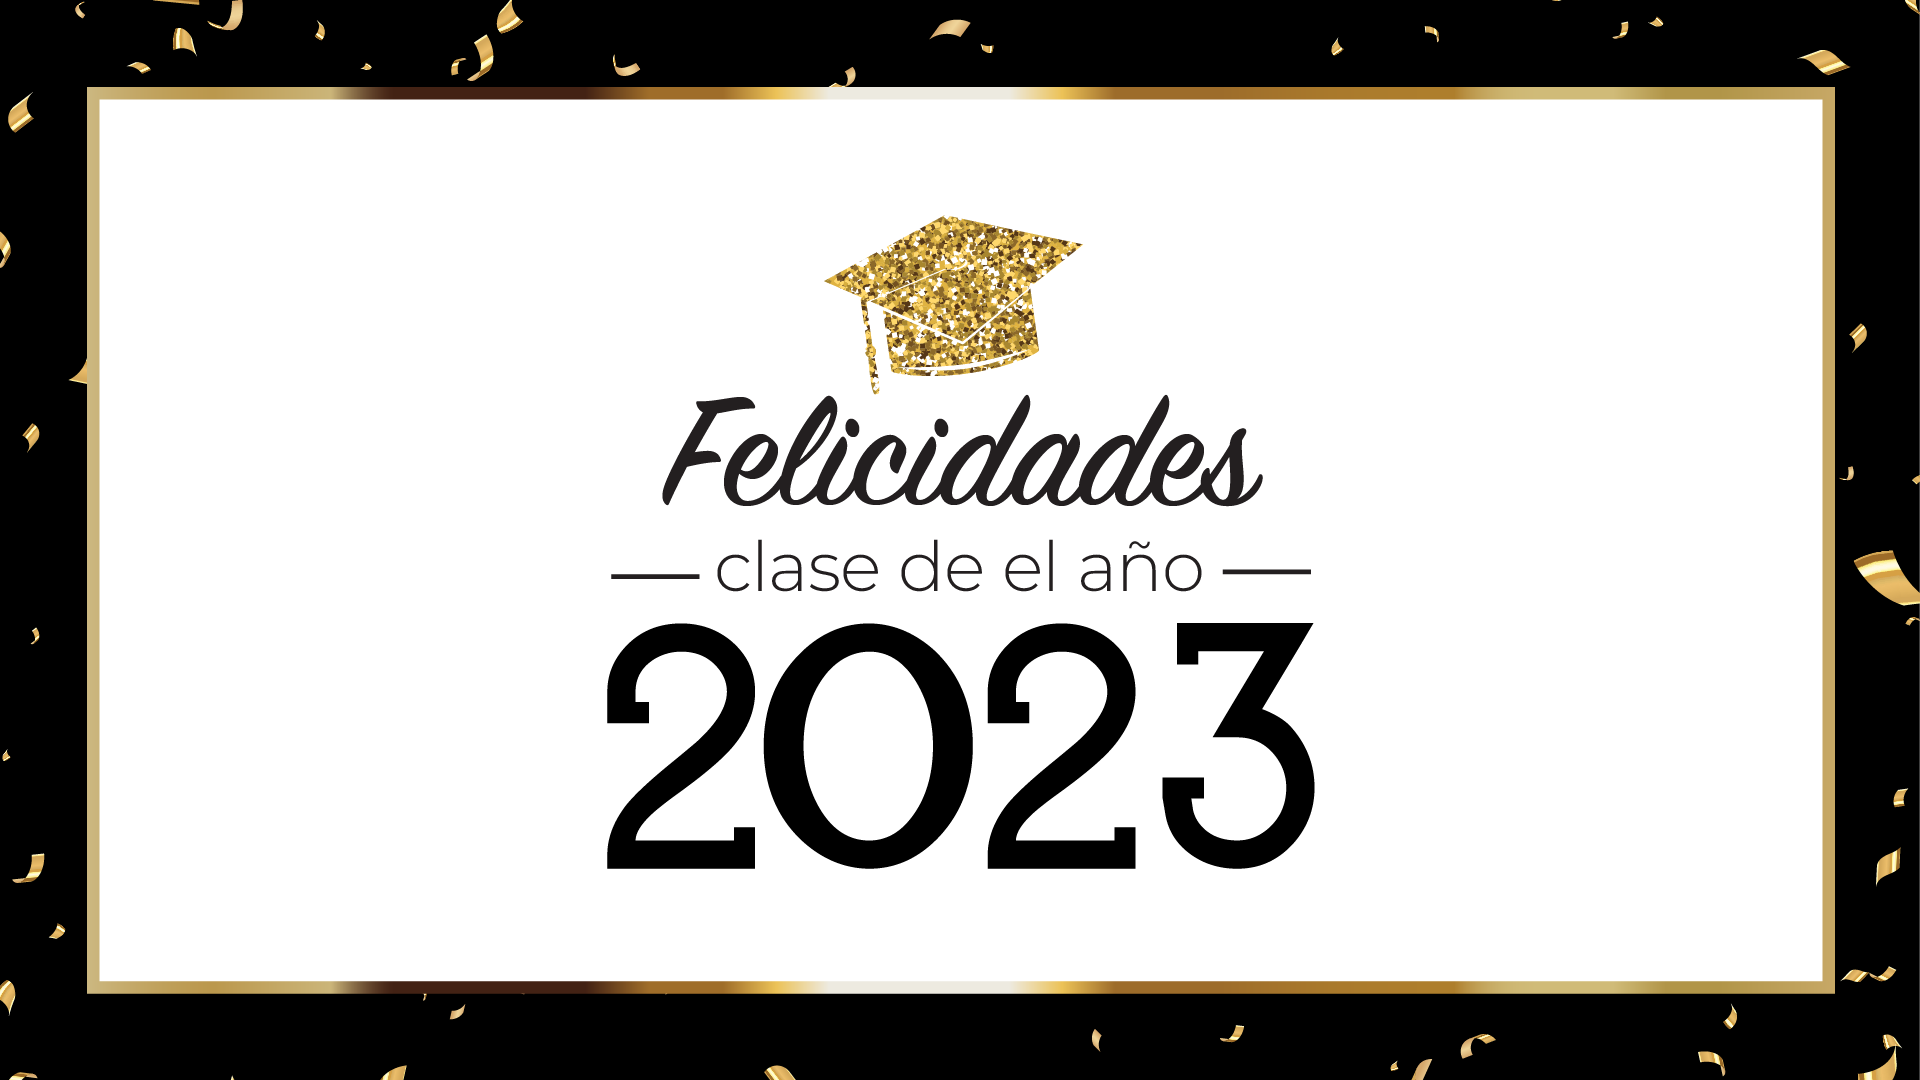 Congratulations class of 2023 (Felicidades with gold confetti)